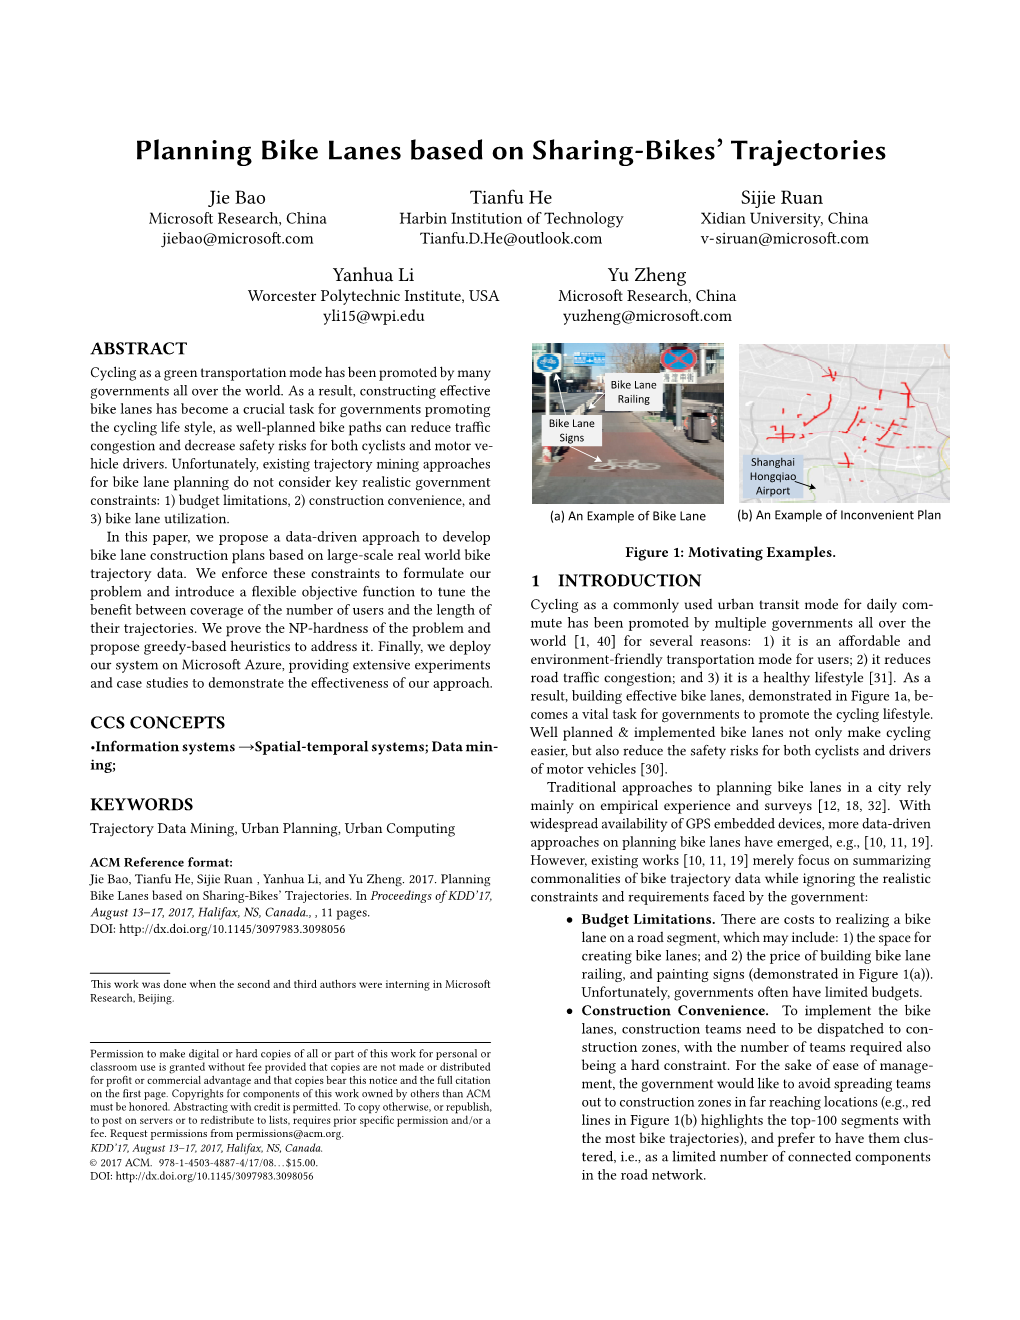 Planning Bike Lanes Based on Sharing-Bikes' Trajectories